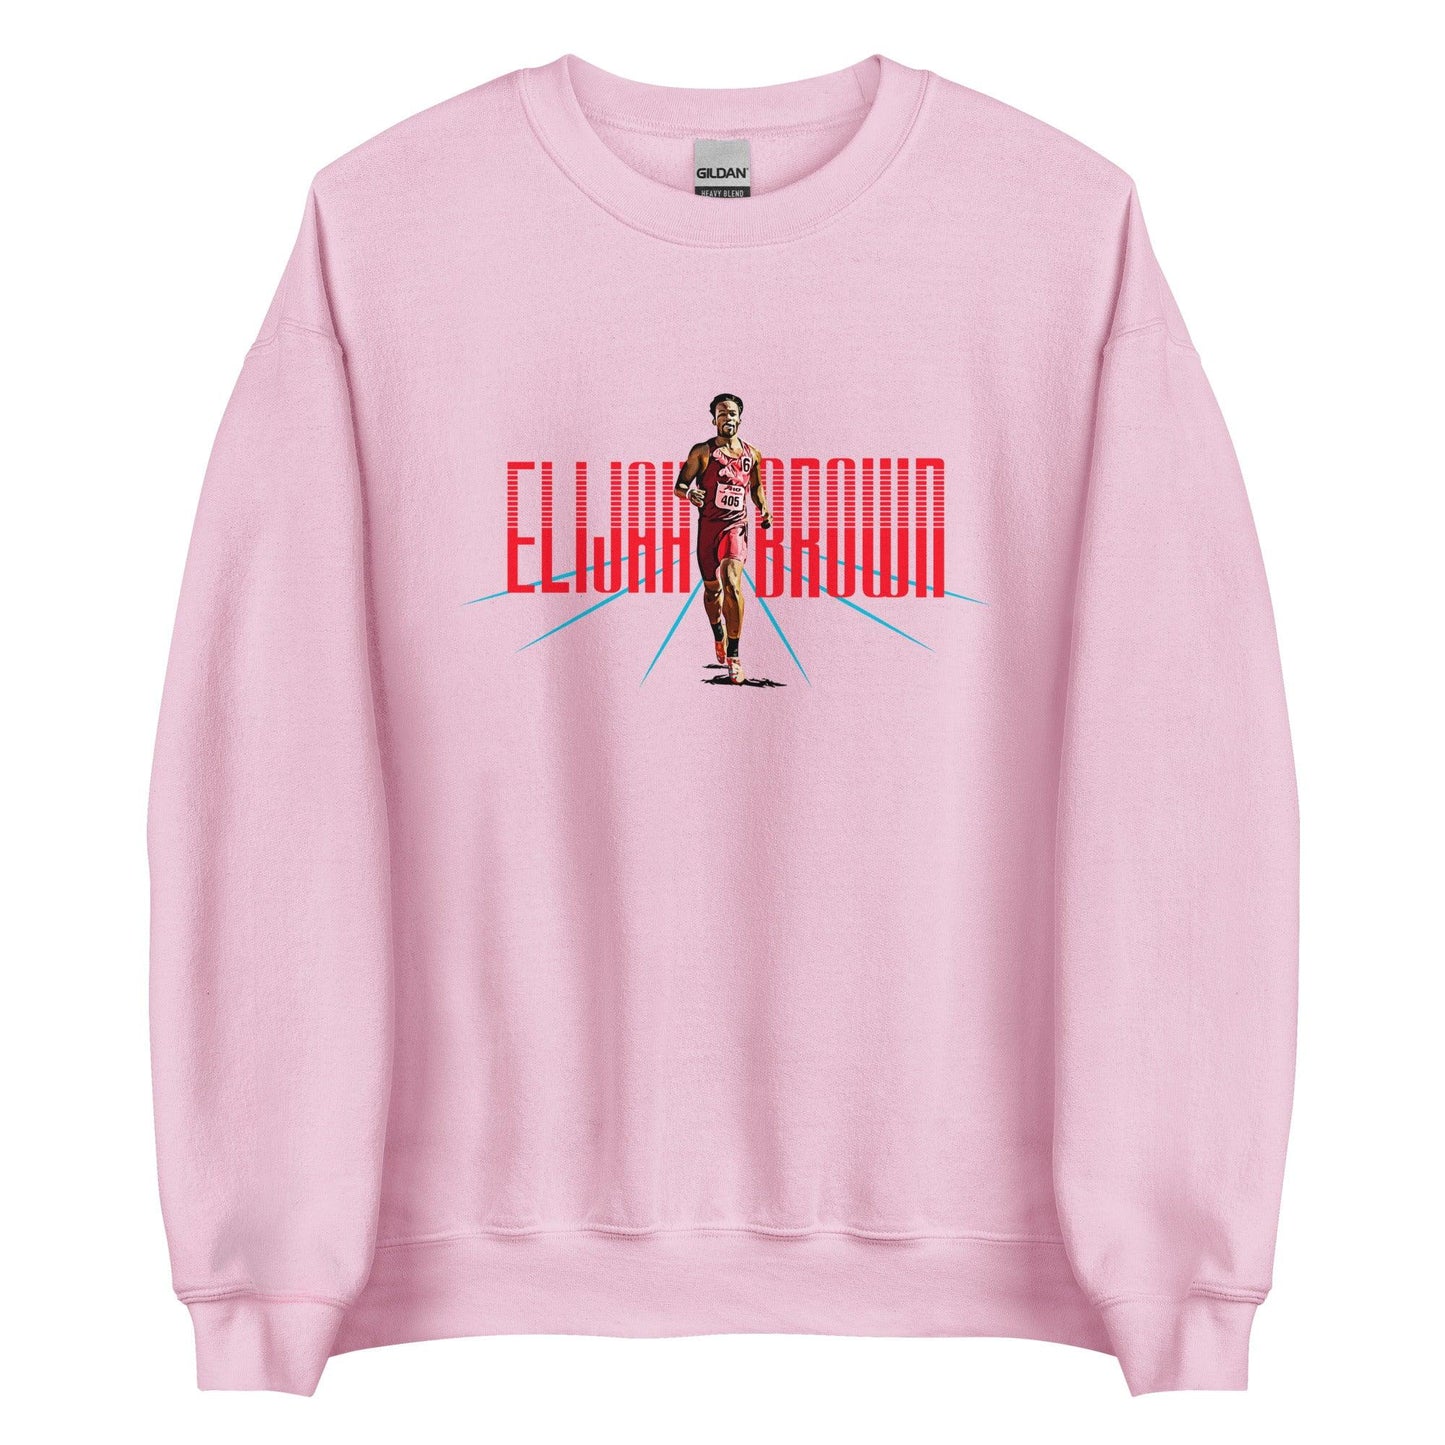 Elijah Brown "Gameday" Sweatshirt - Fan Arch